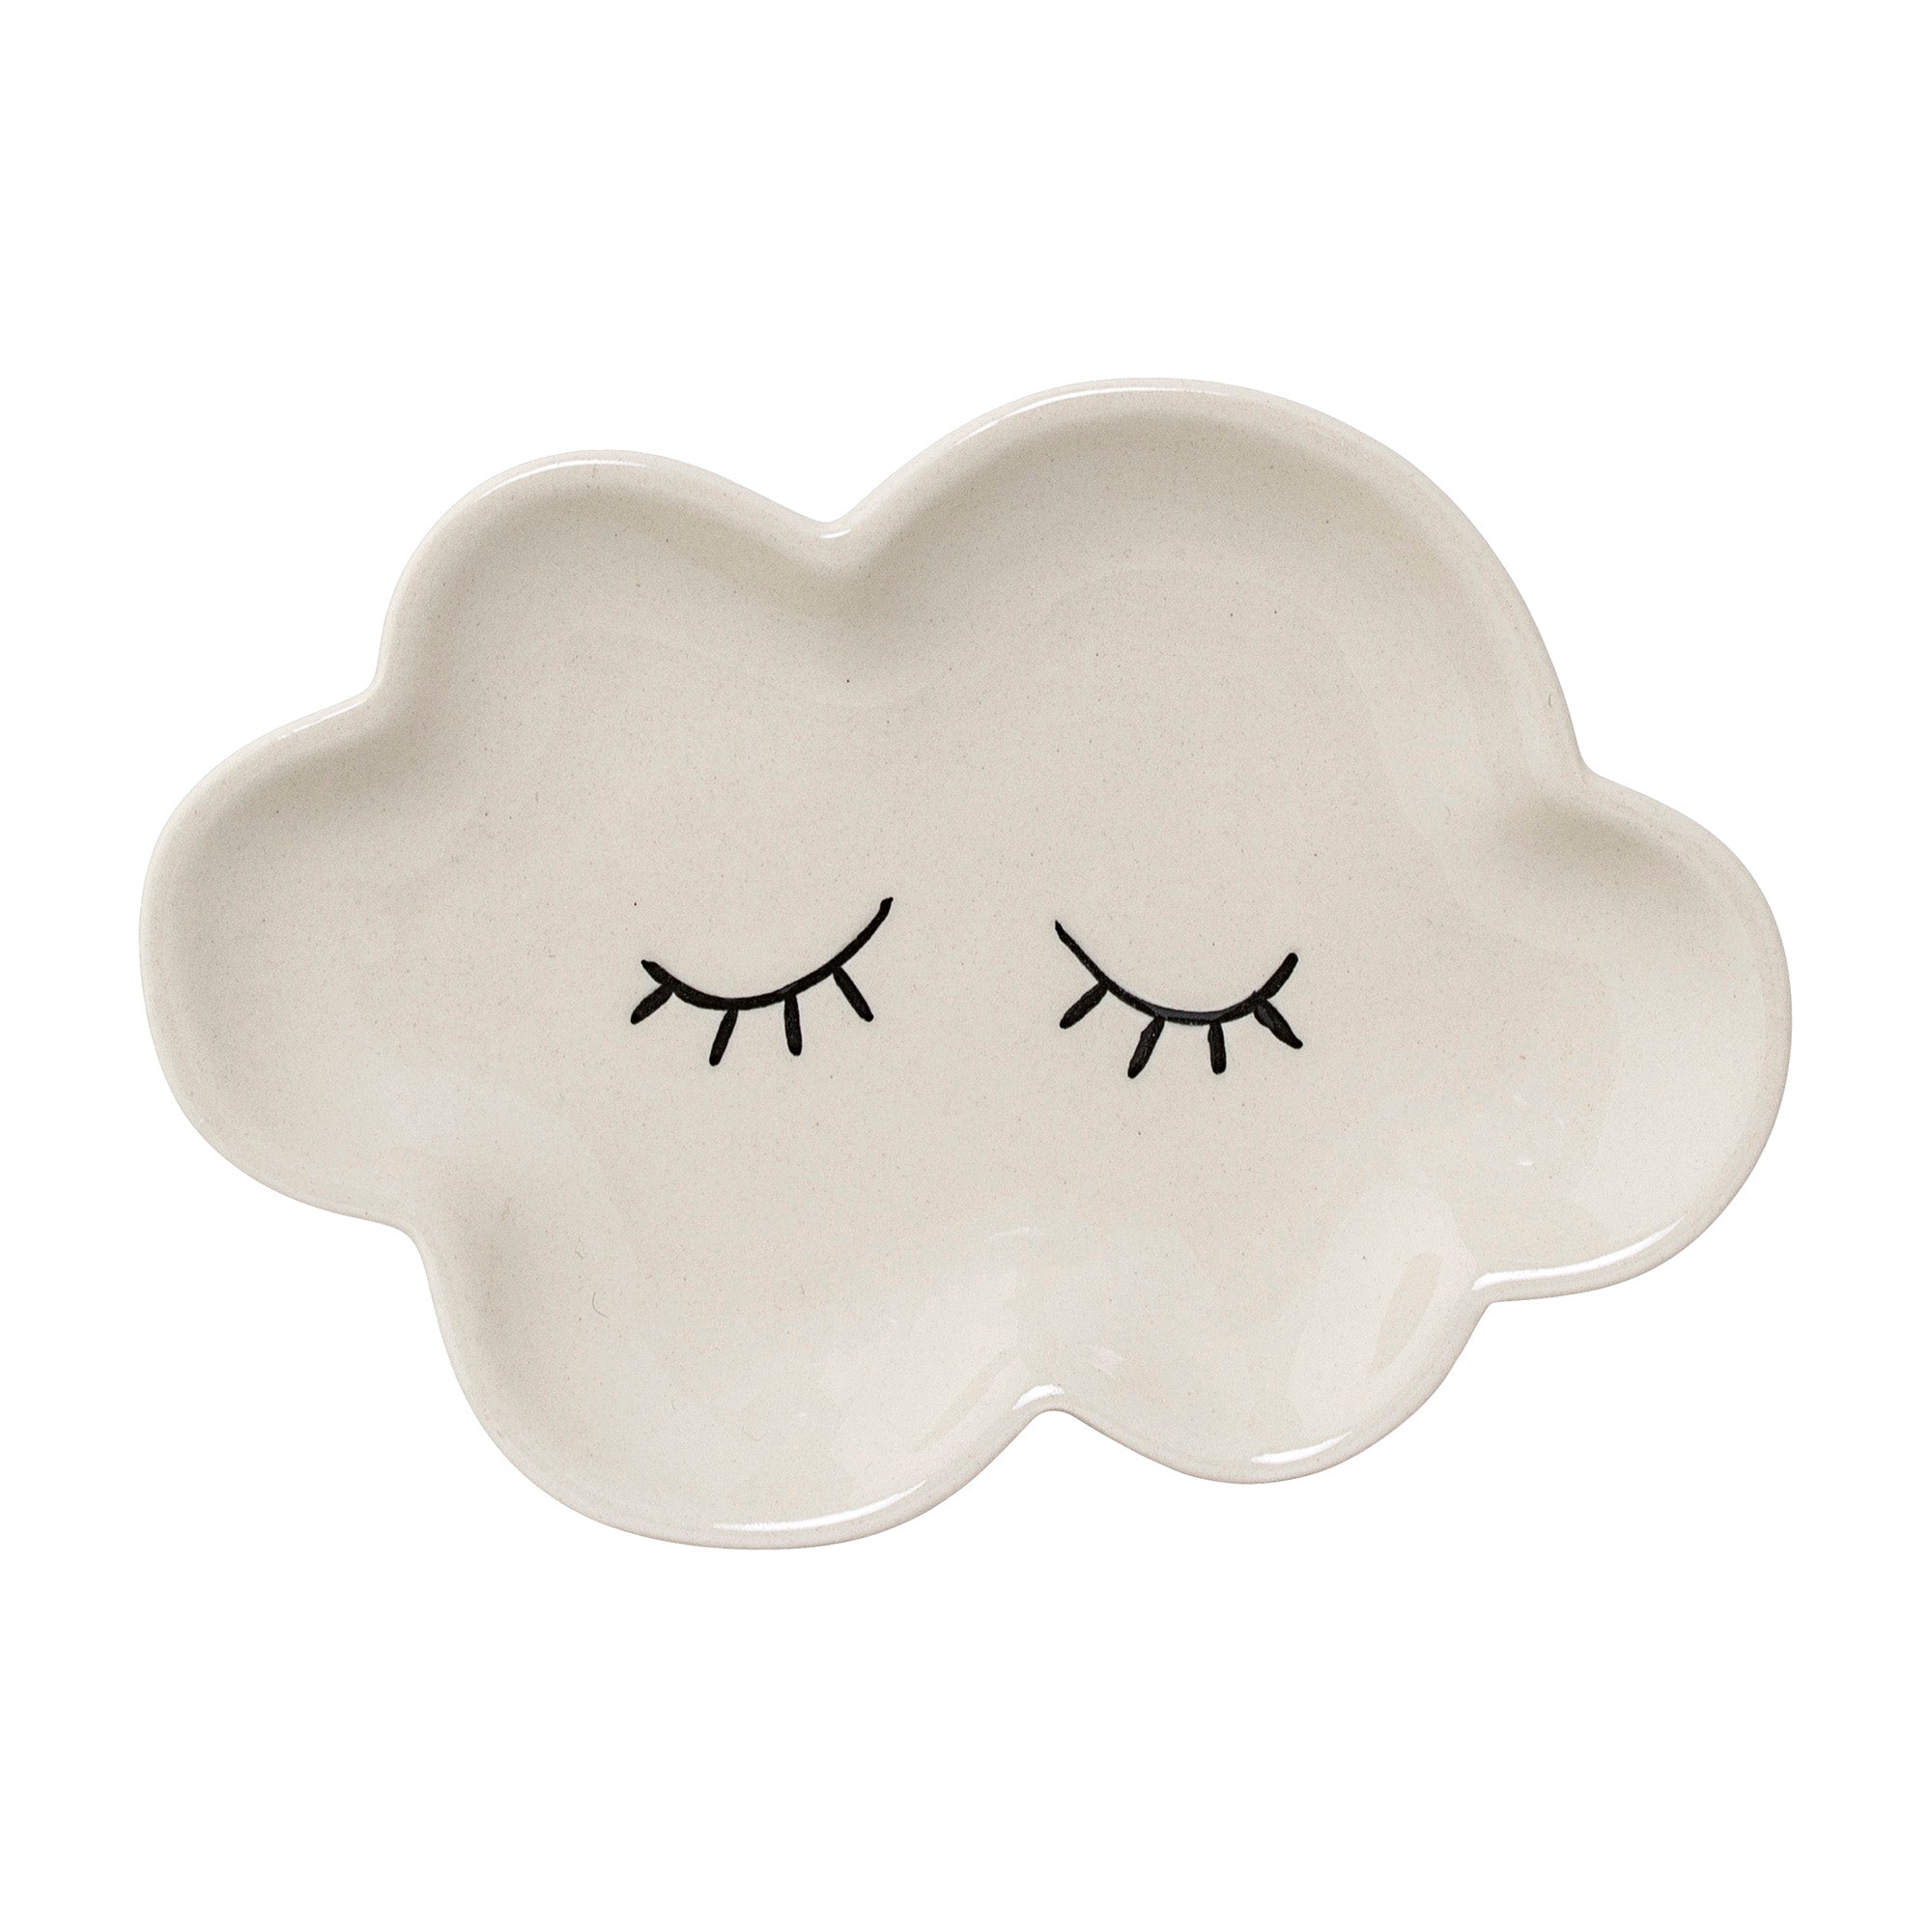 Smilla White, Stoneware Plate, BLOOMINGVILLE-VONMEL Luxe Gifts